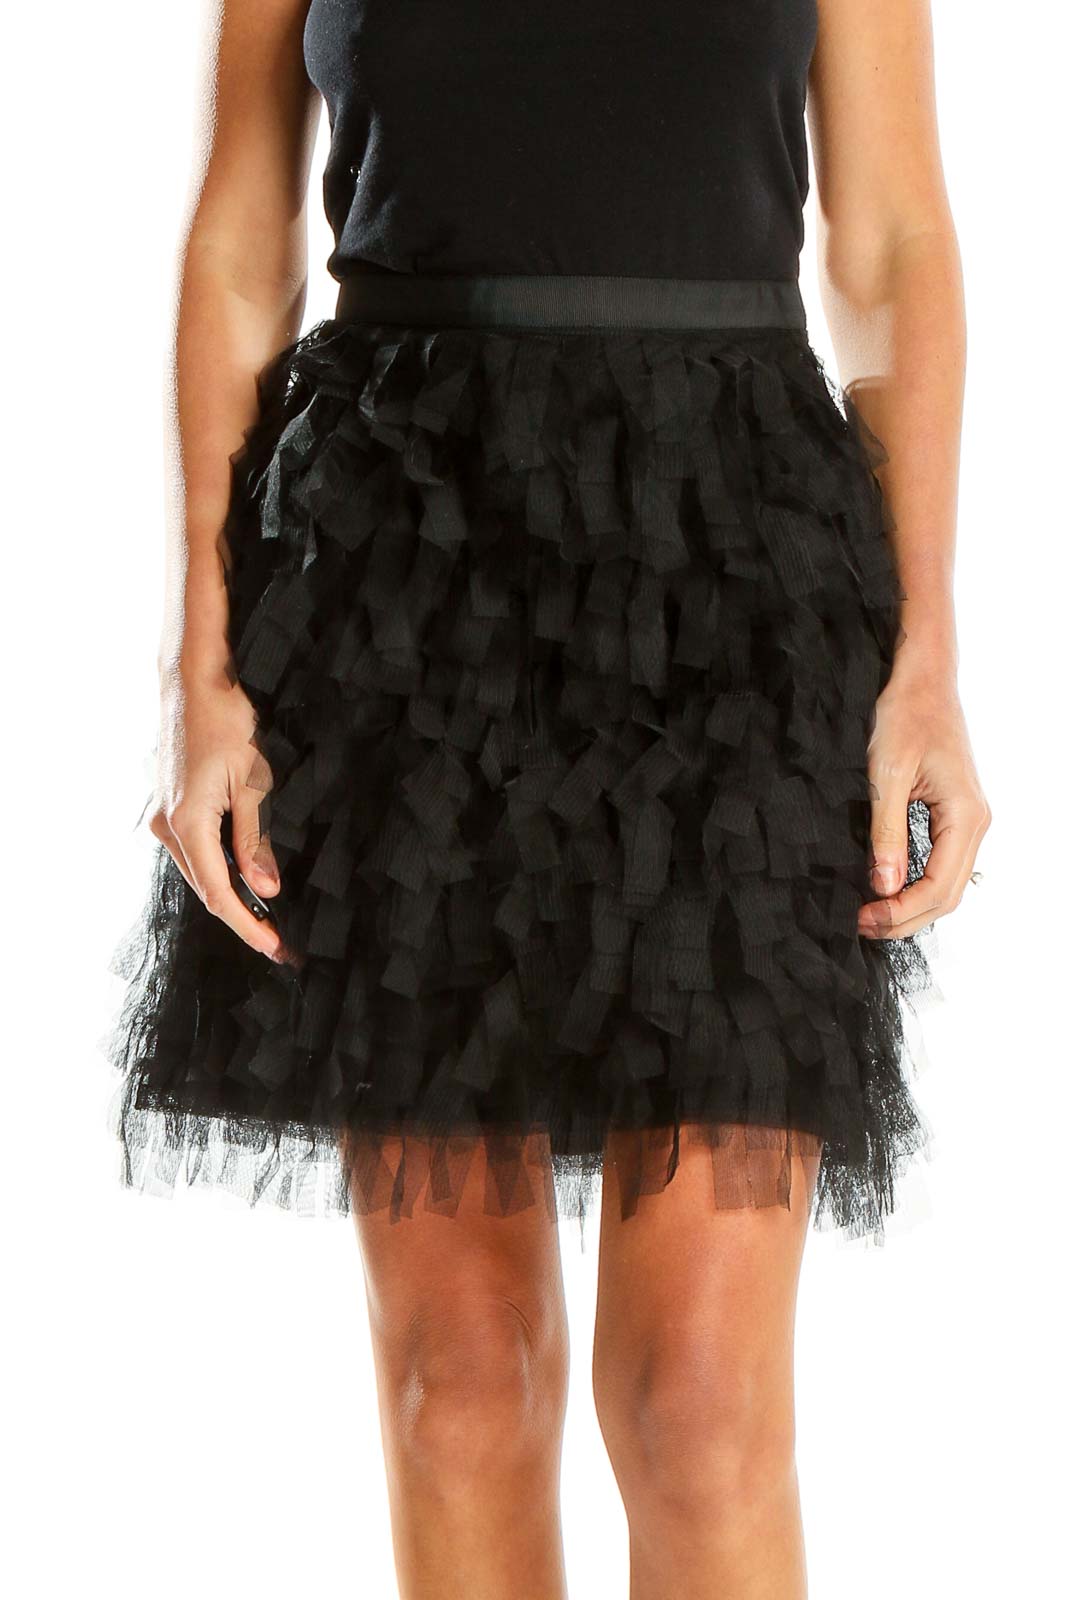 Black Chic Ruffle Flared Skirt Front